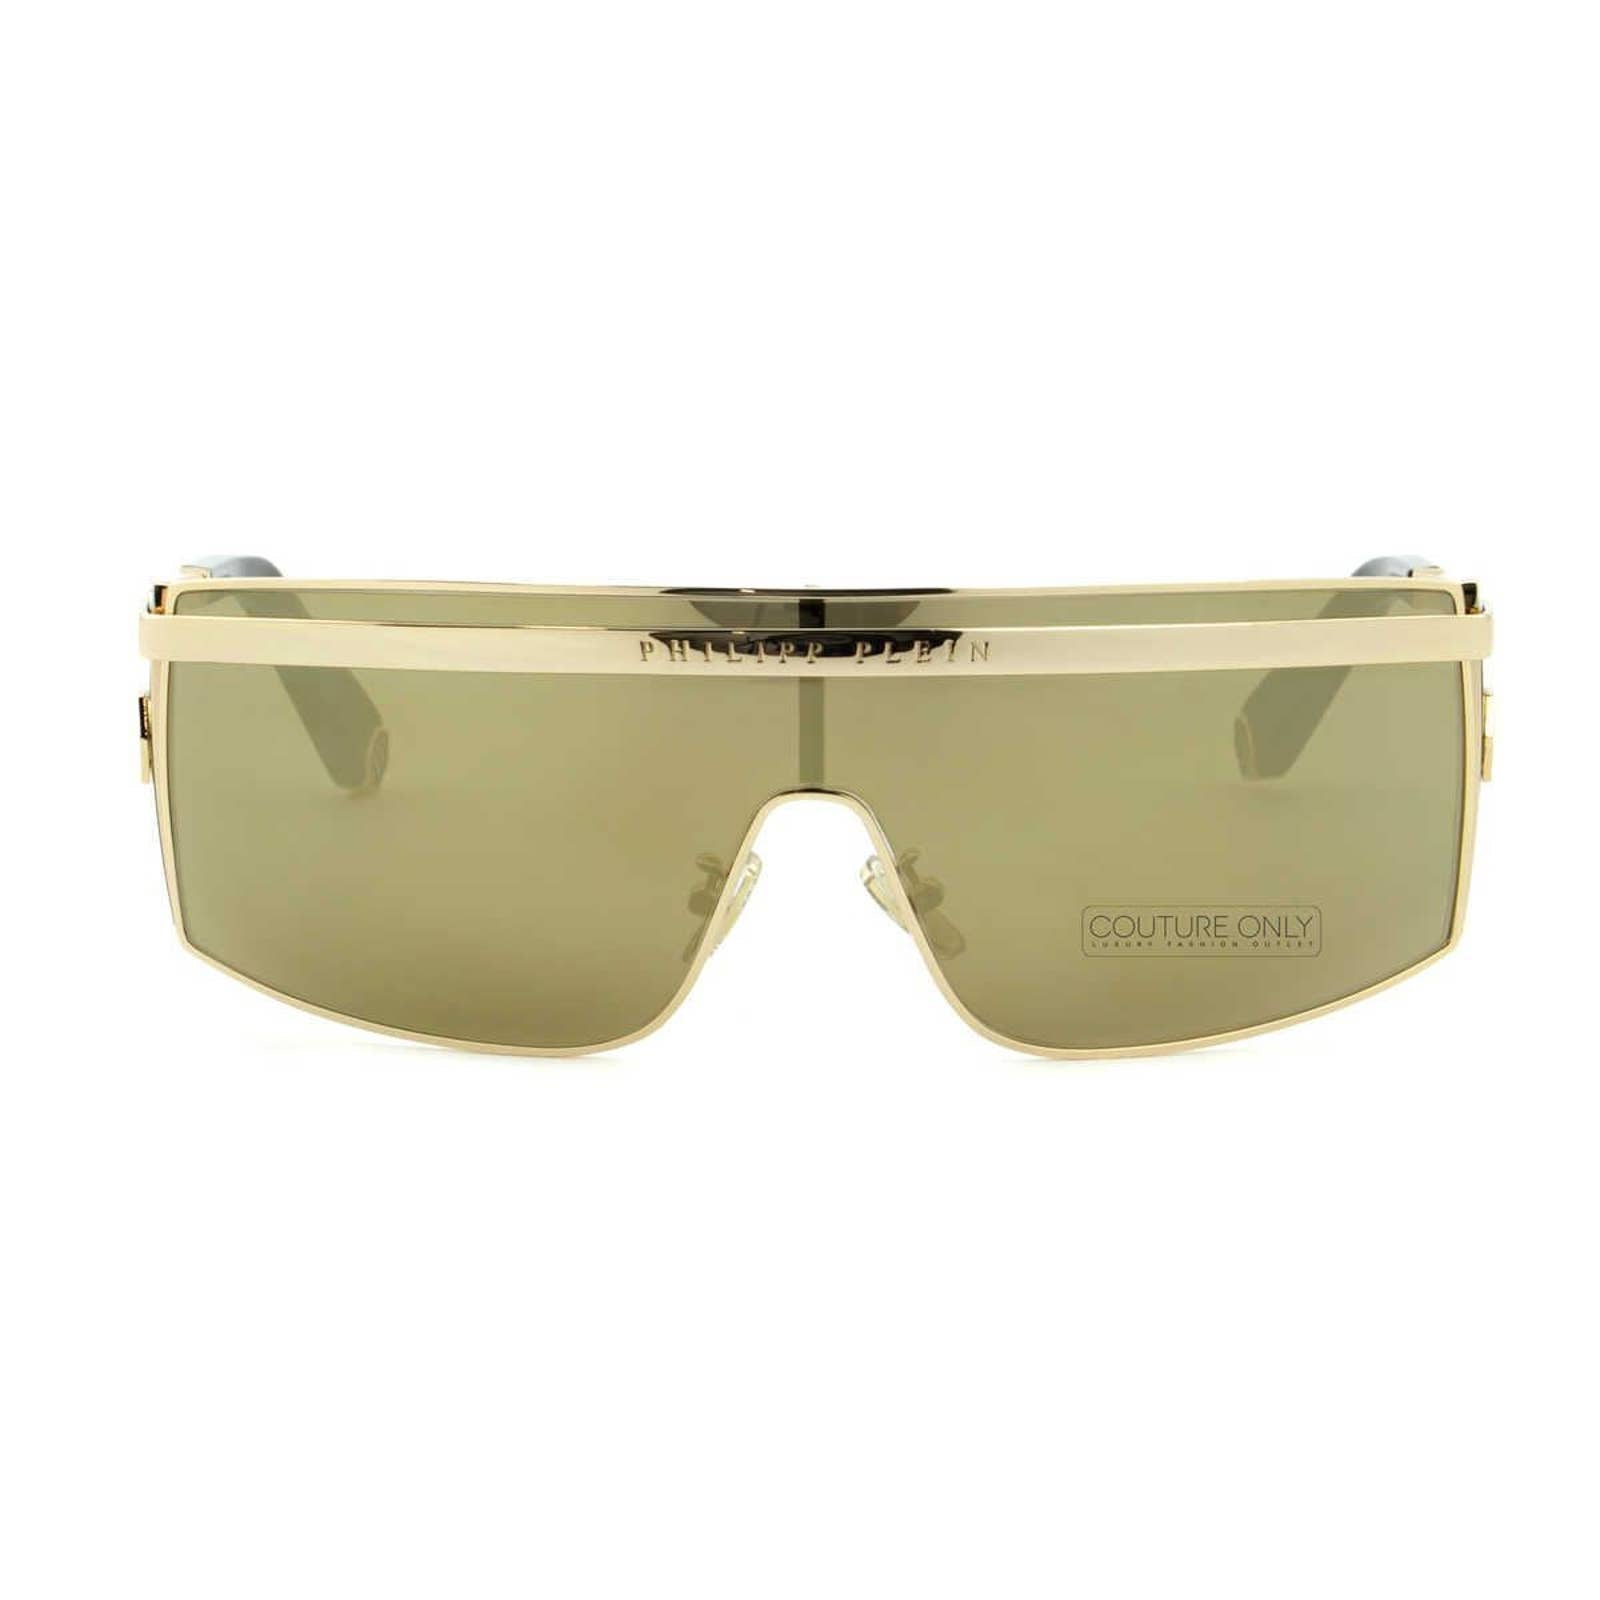 Philipp Plein Shield Sunglasses. Crafted in Italy